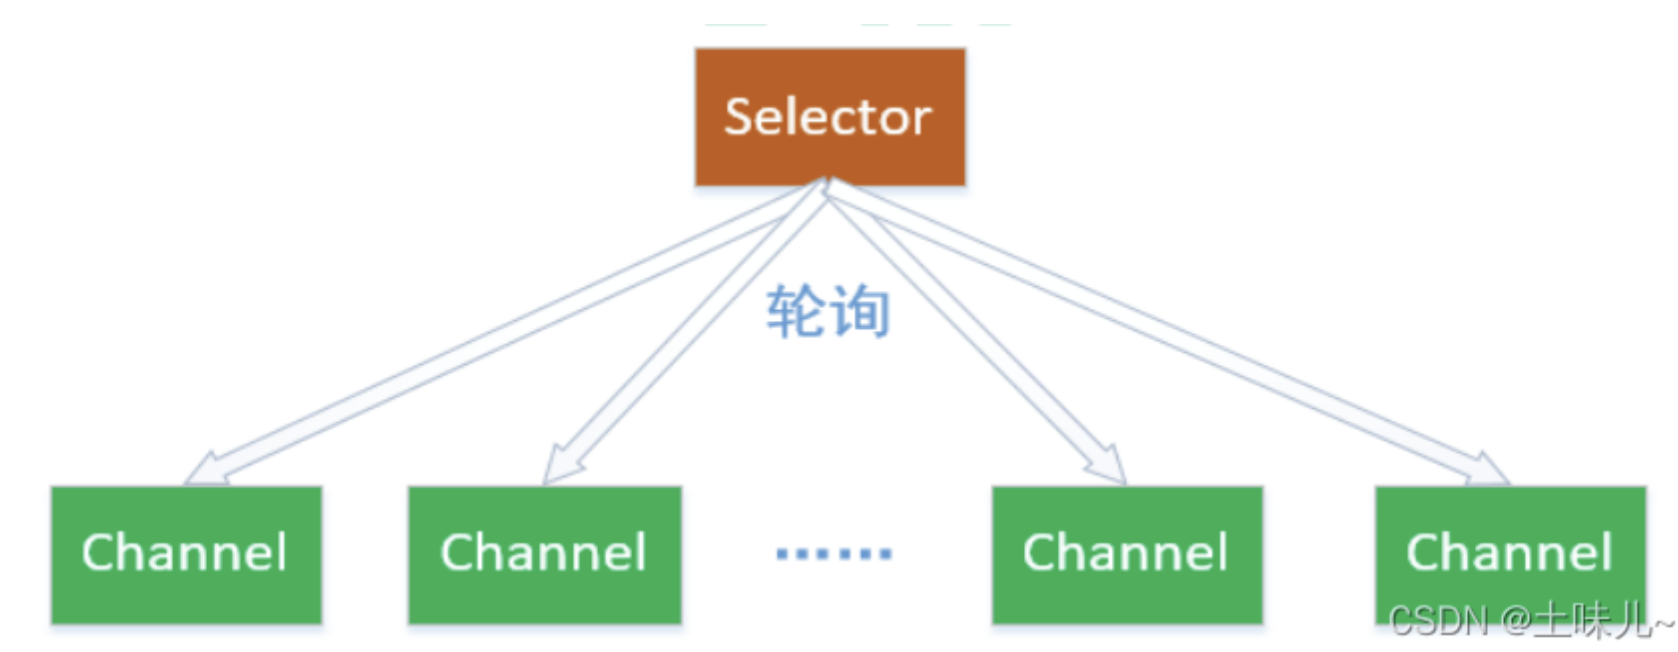 NIO学习总结（二）——Selector、FileLock、Path、Files、聊天室实现